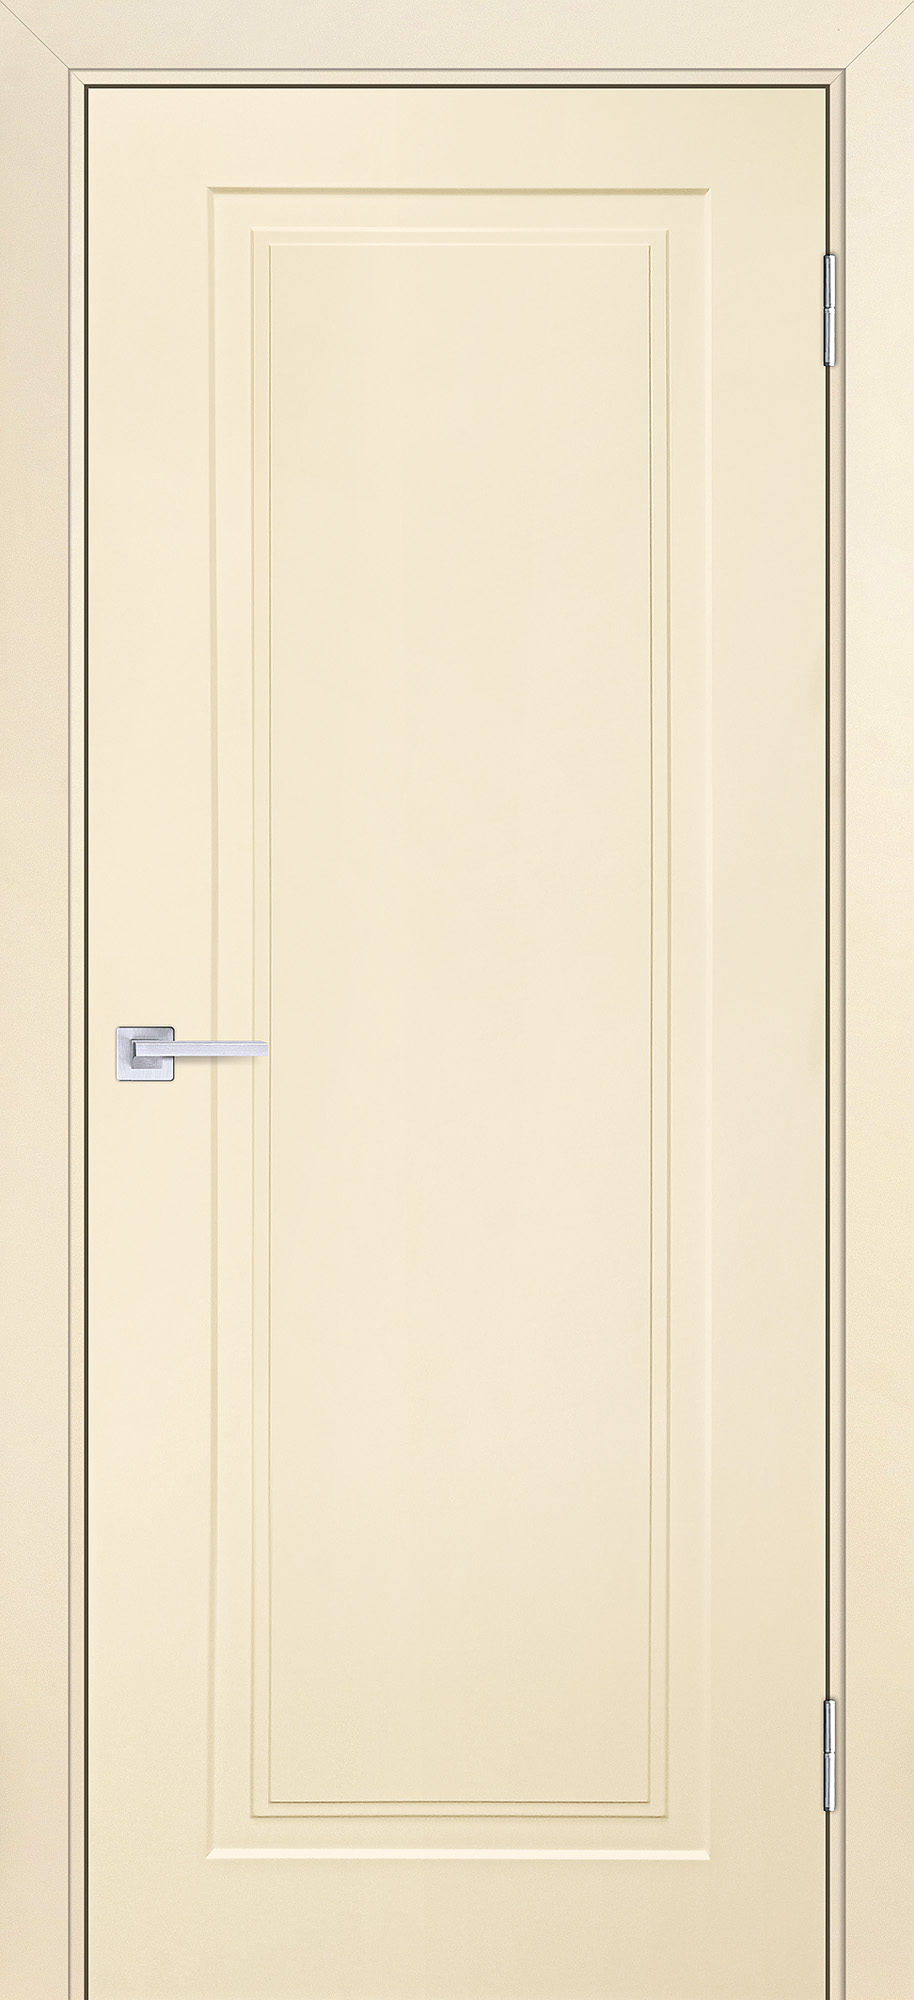 Двери крашеные (Эмаль) ТЕКОНА Смальта-Лайн 06 глухое Айвори ral 1013 размер 200 х 60 см. артикул F0000093272